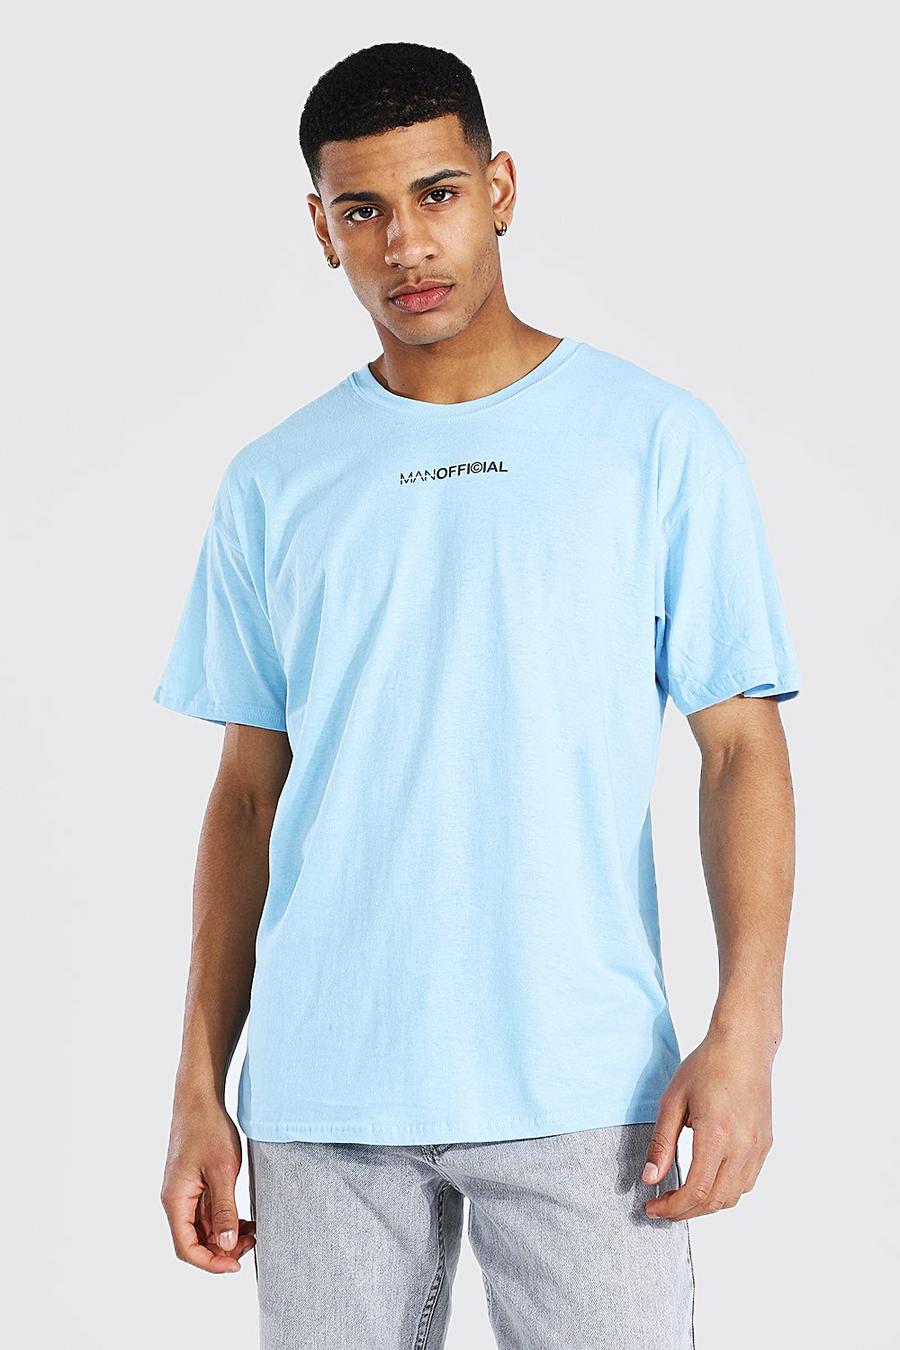 Light blue Oversized Man Official T-shirt image number 1